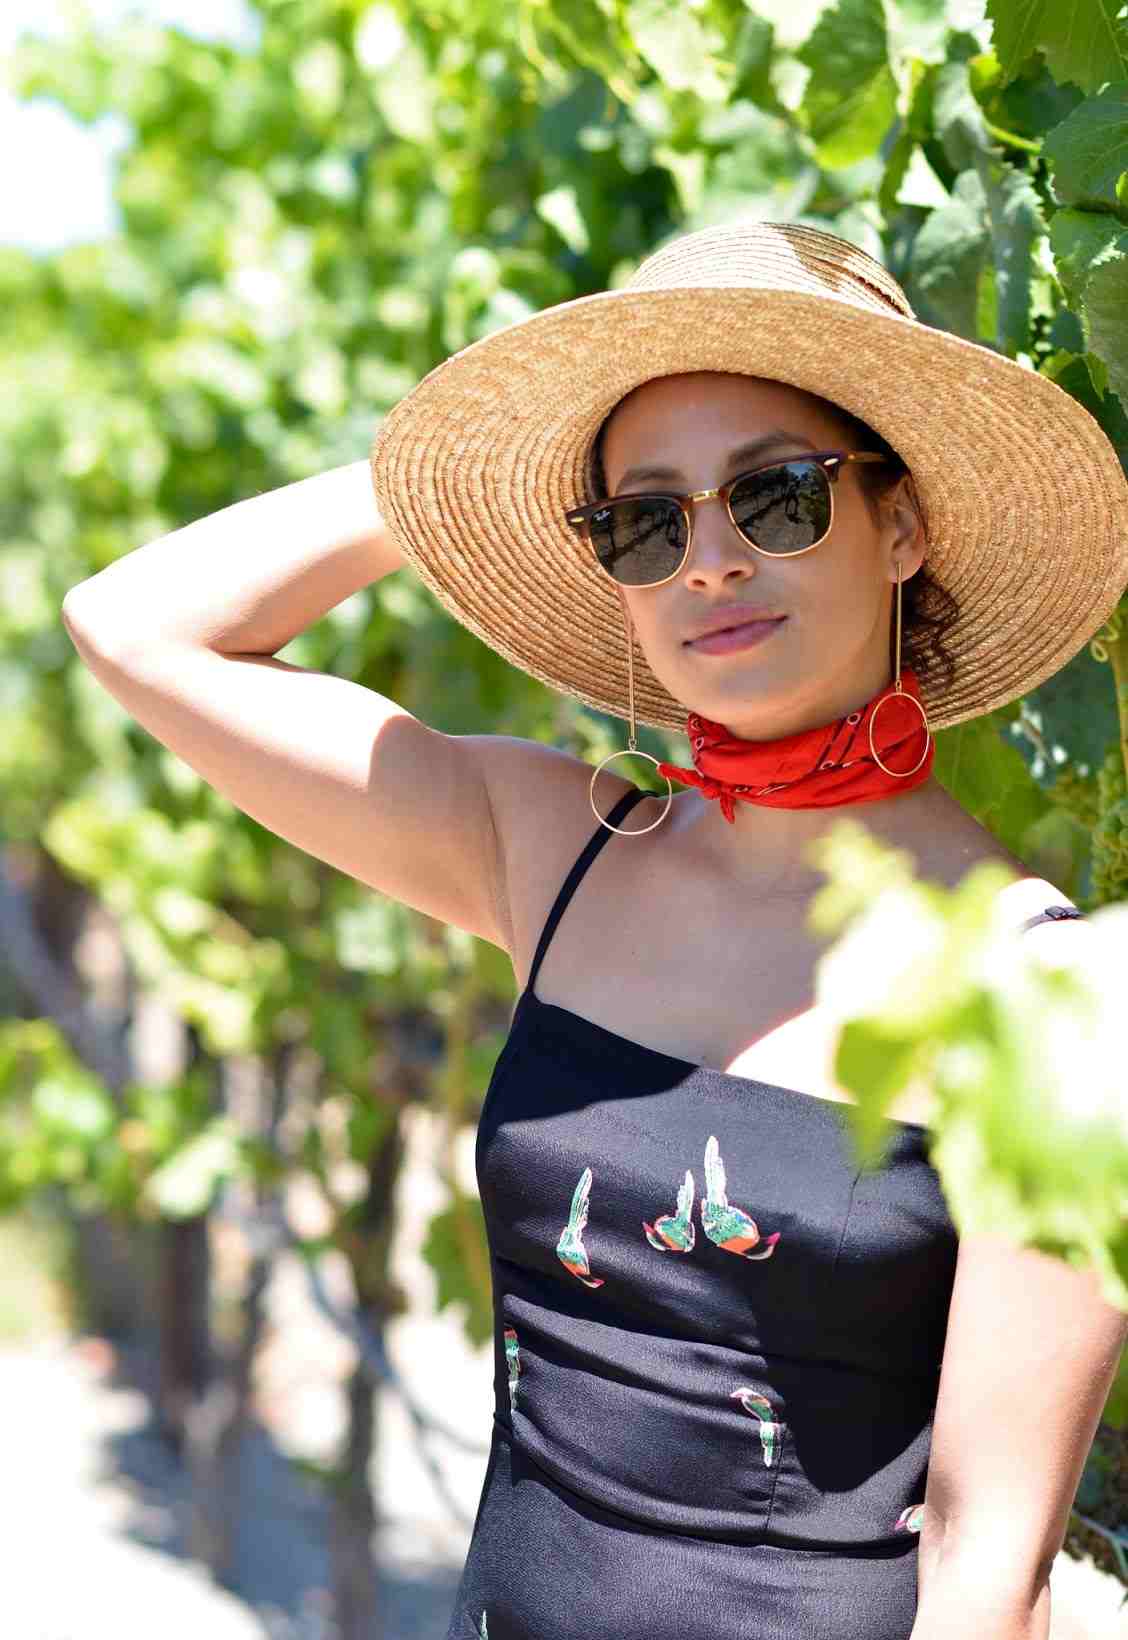 Wedding hat for women Trend 2019 Sunglasses face shape